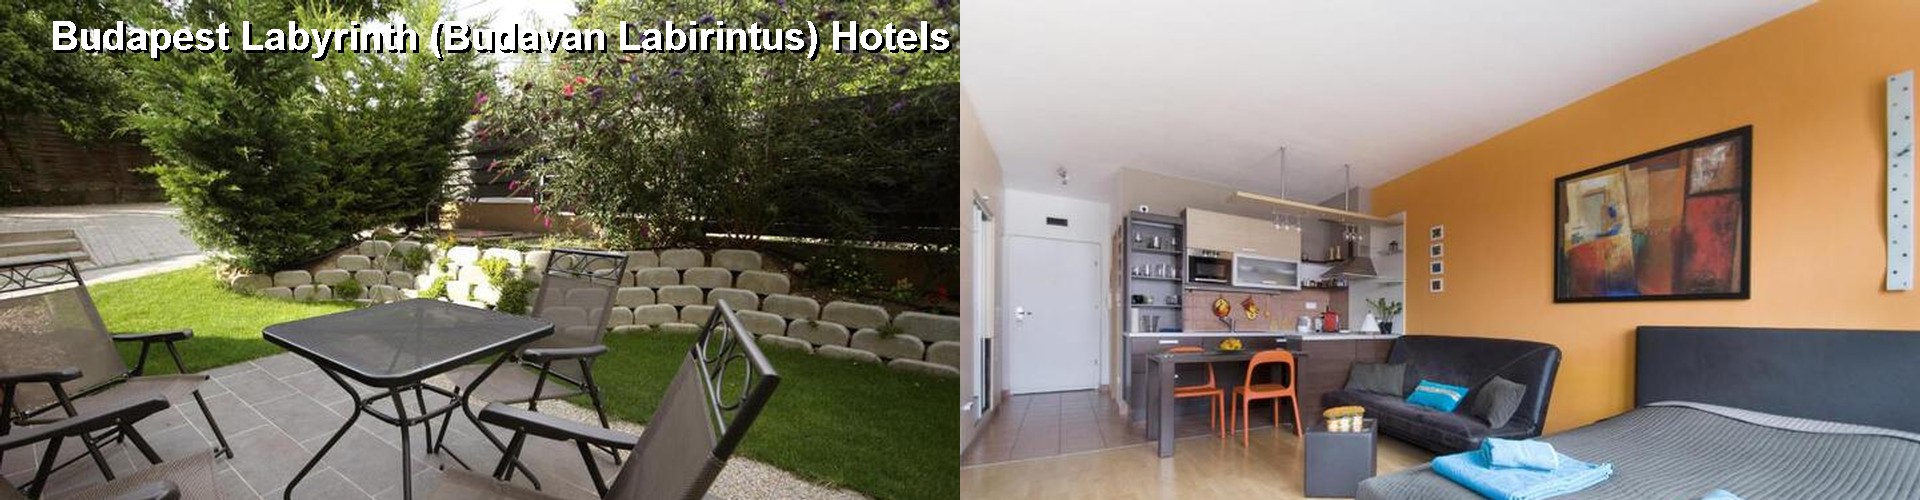 5 Best Hotels near Budapest Labyrinth (Budavan Labirintus)